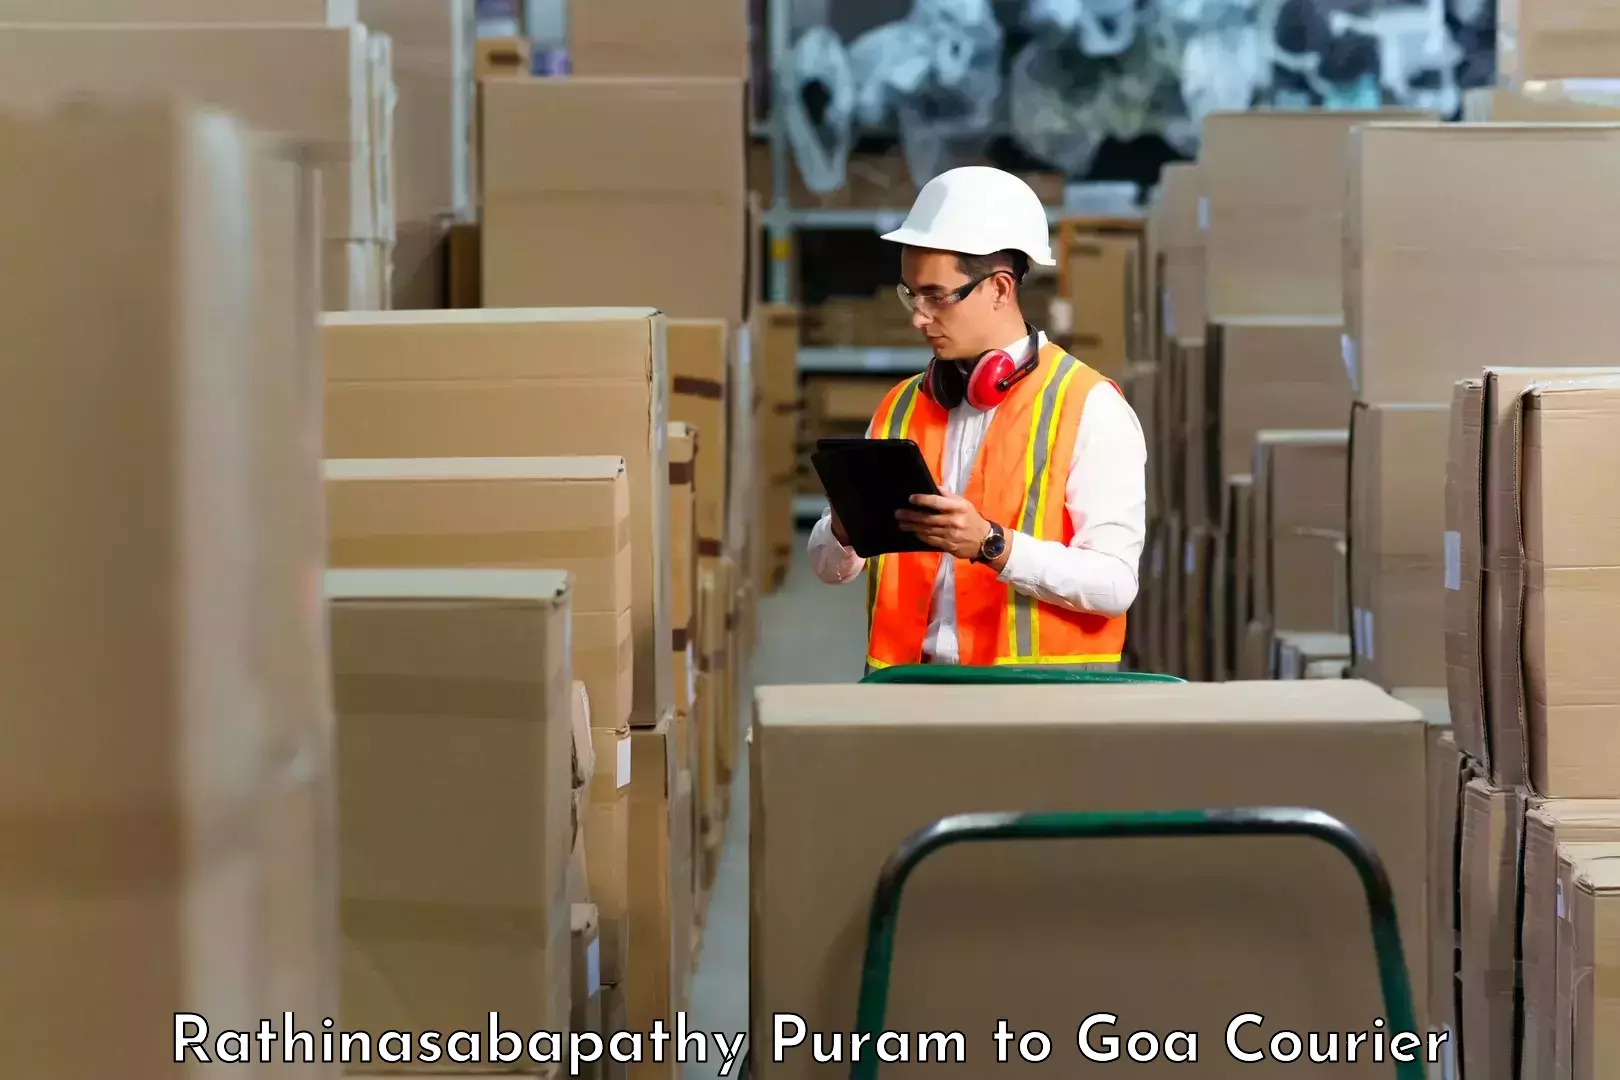 Professional courier handling Rathinasabapathy Puram to Sanvordem